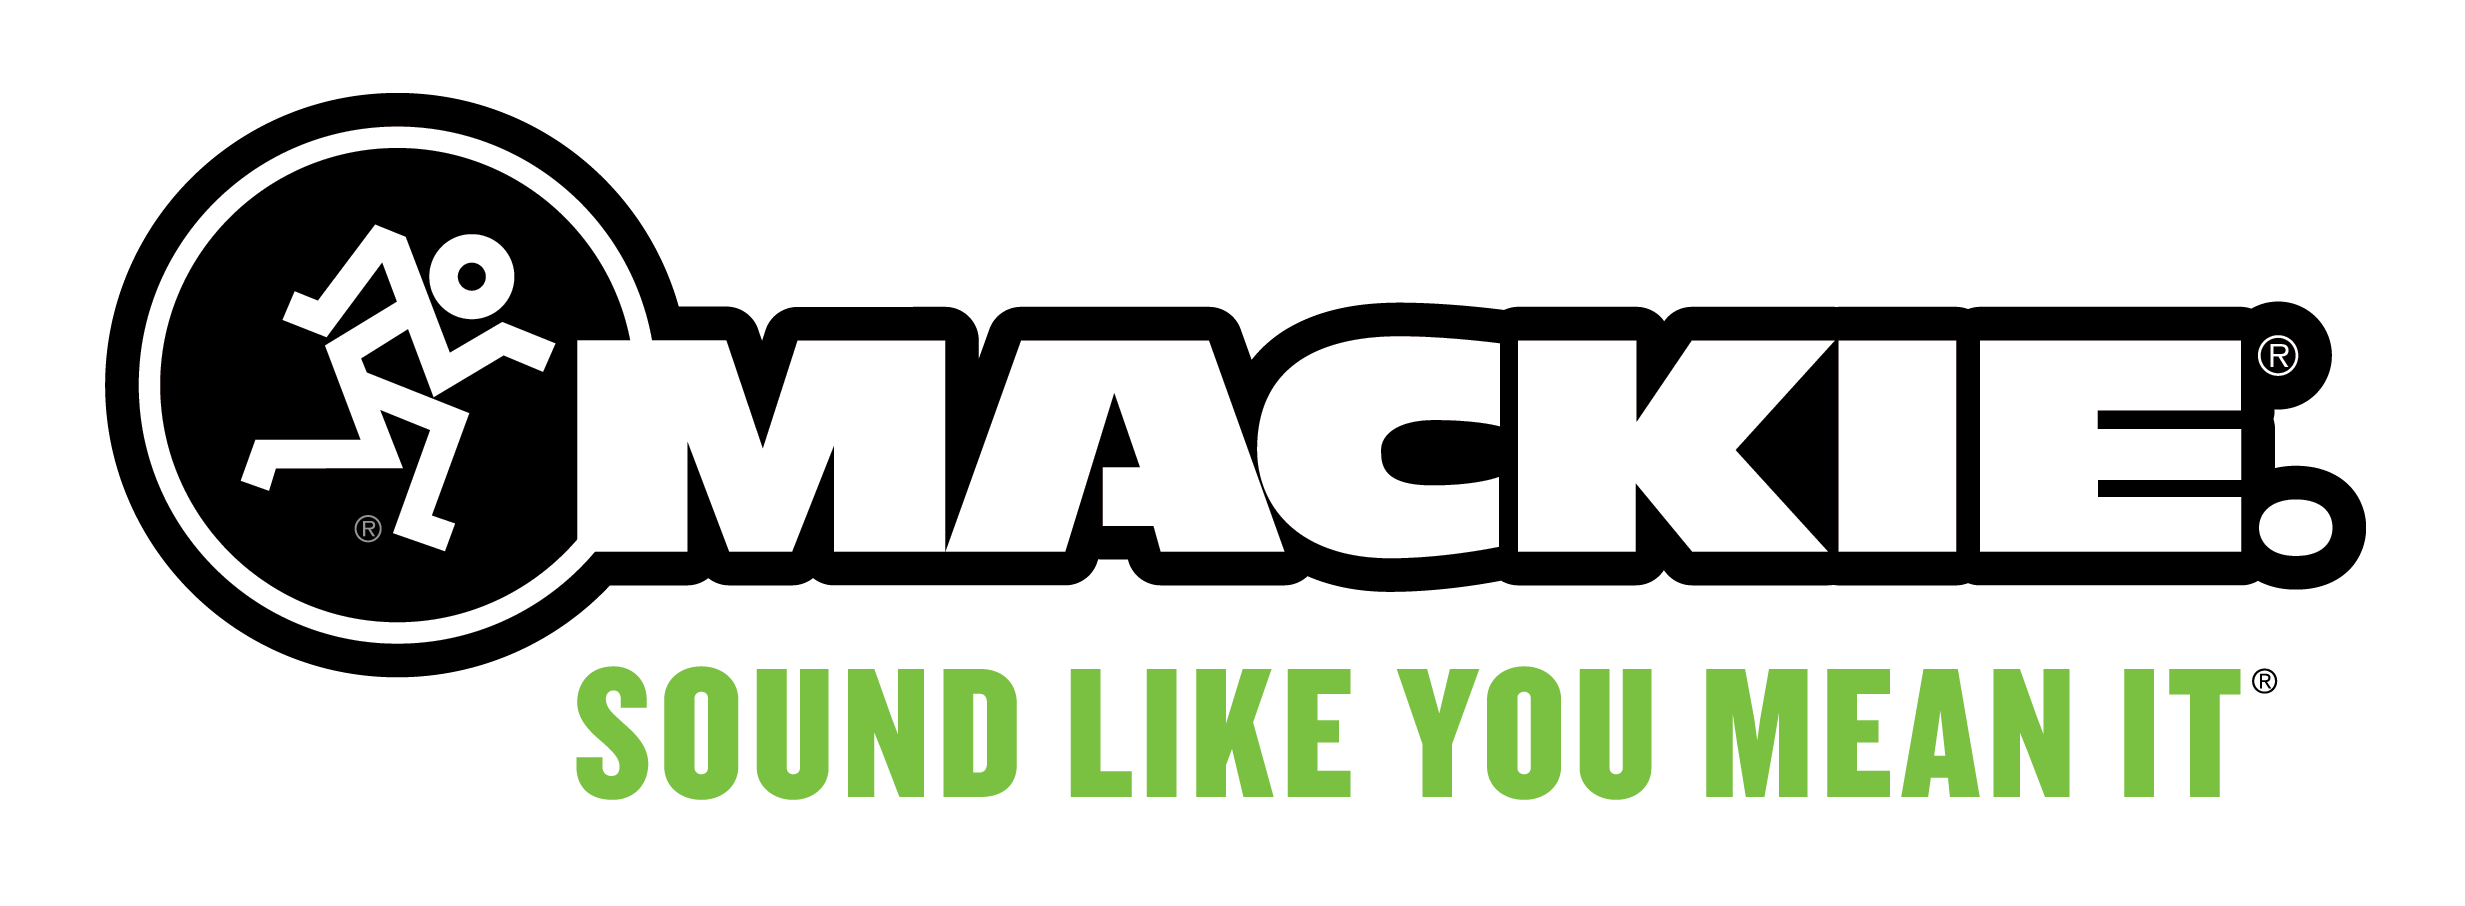 Mackielogo.png (73 KB)